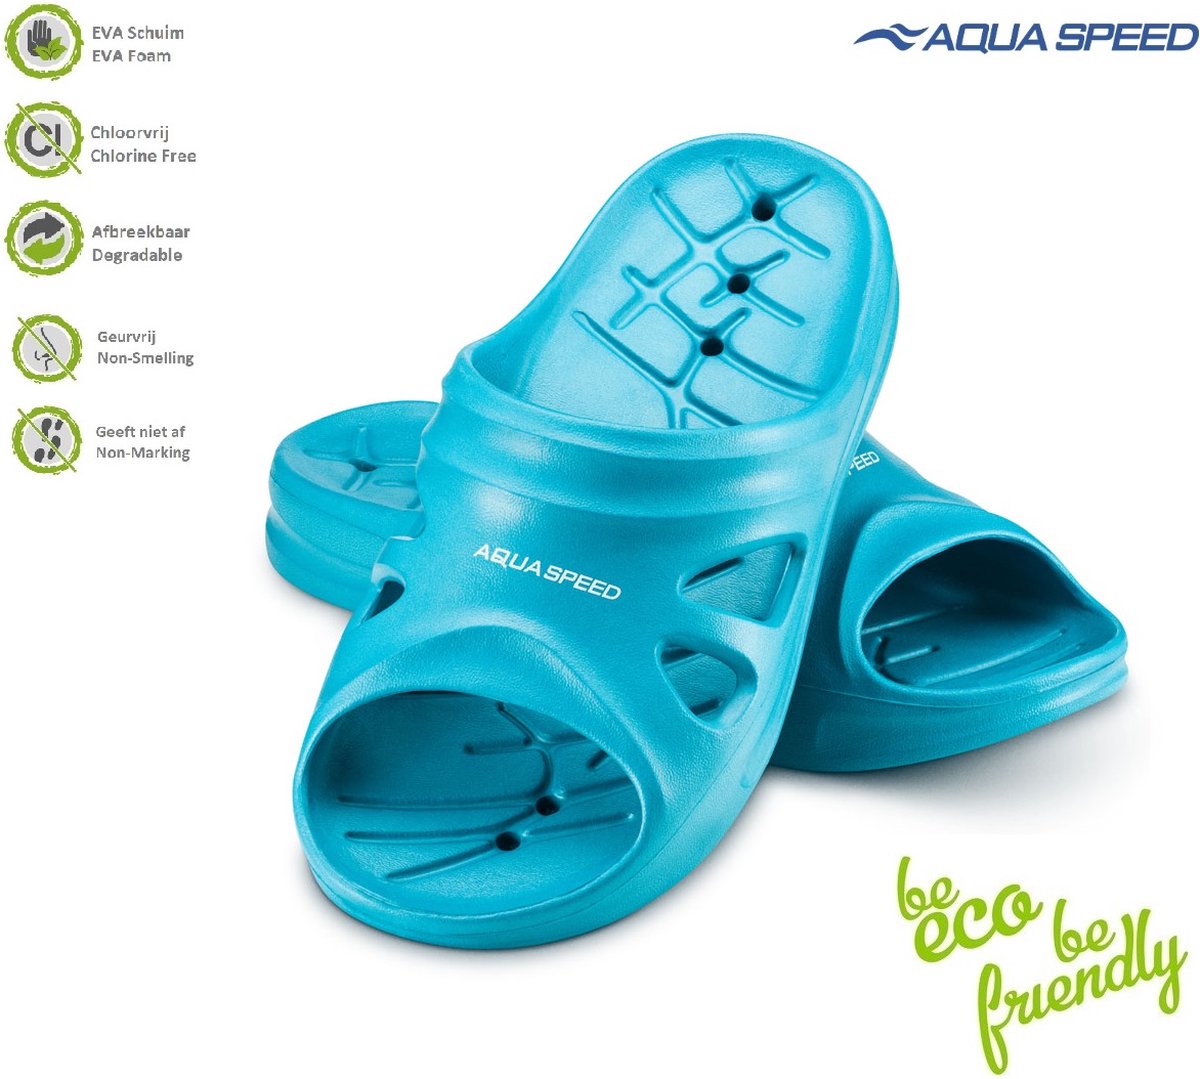 Aqua Speed Florida Badslippers - Licht, Comfortabel en Duurzaam - Turquoise 36